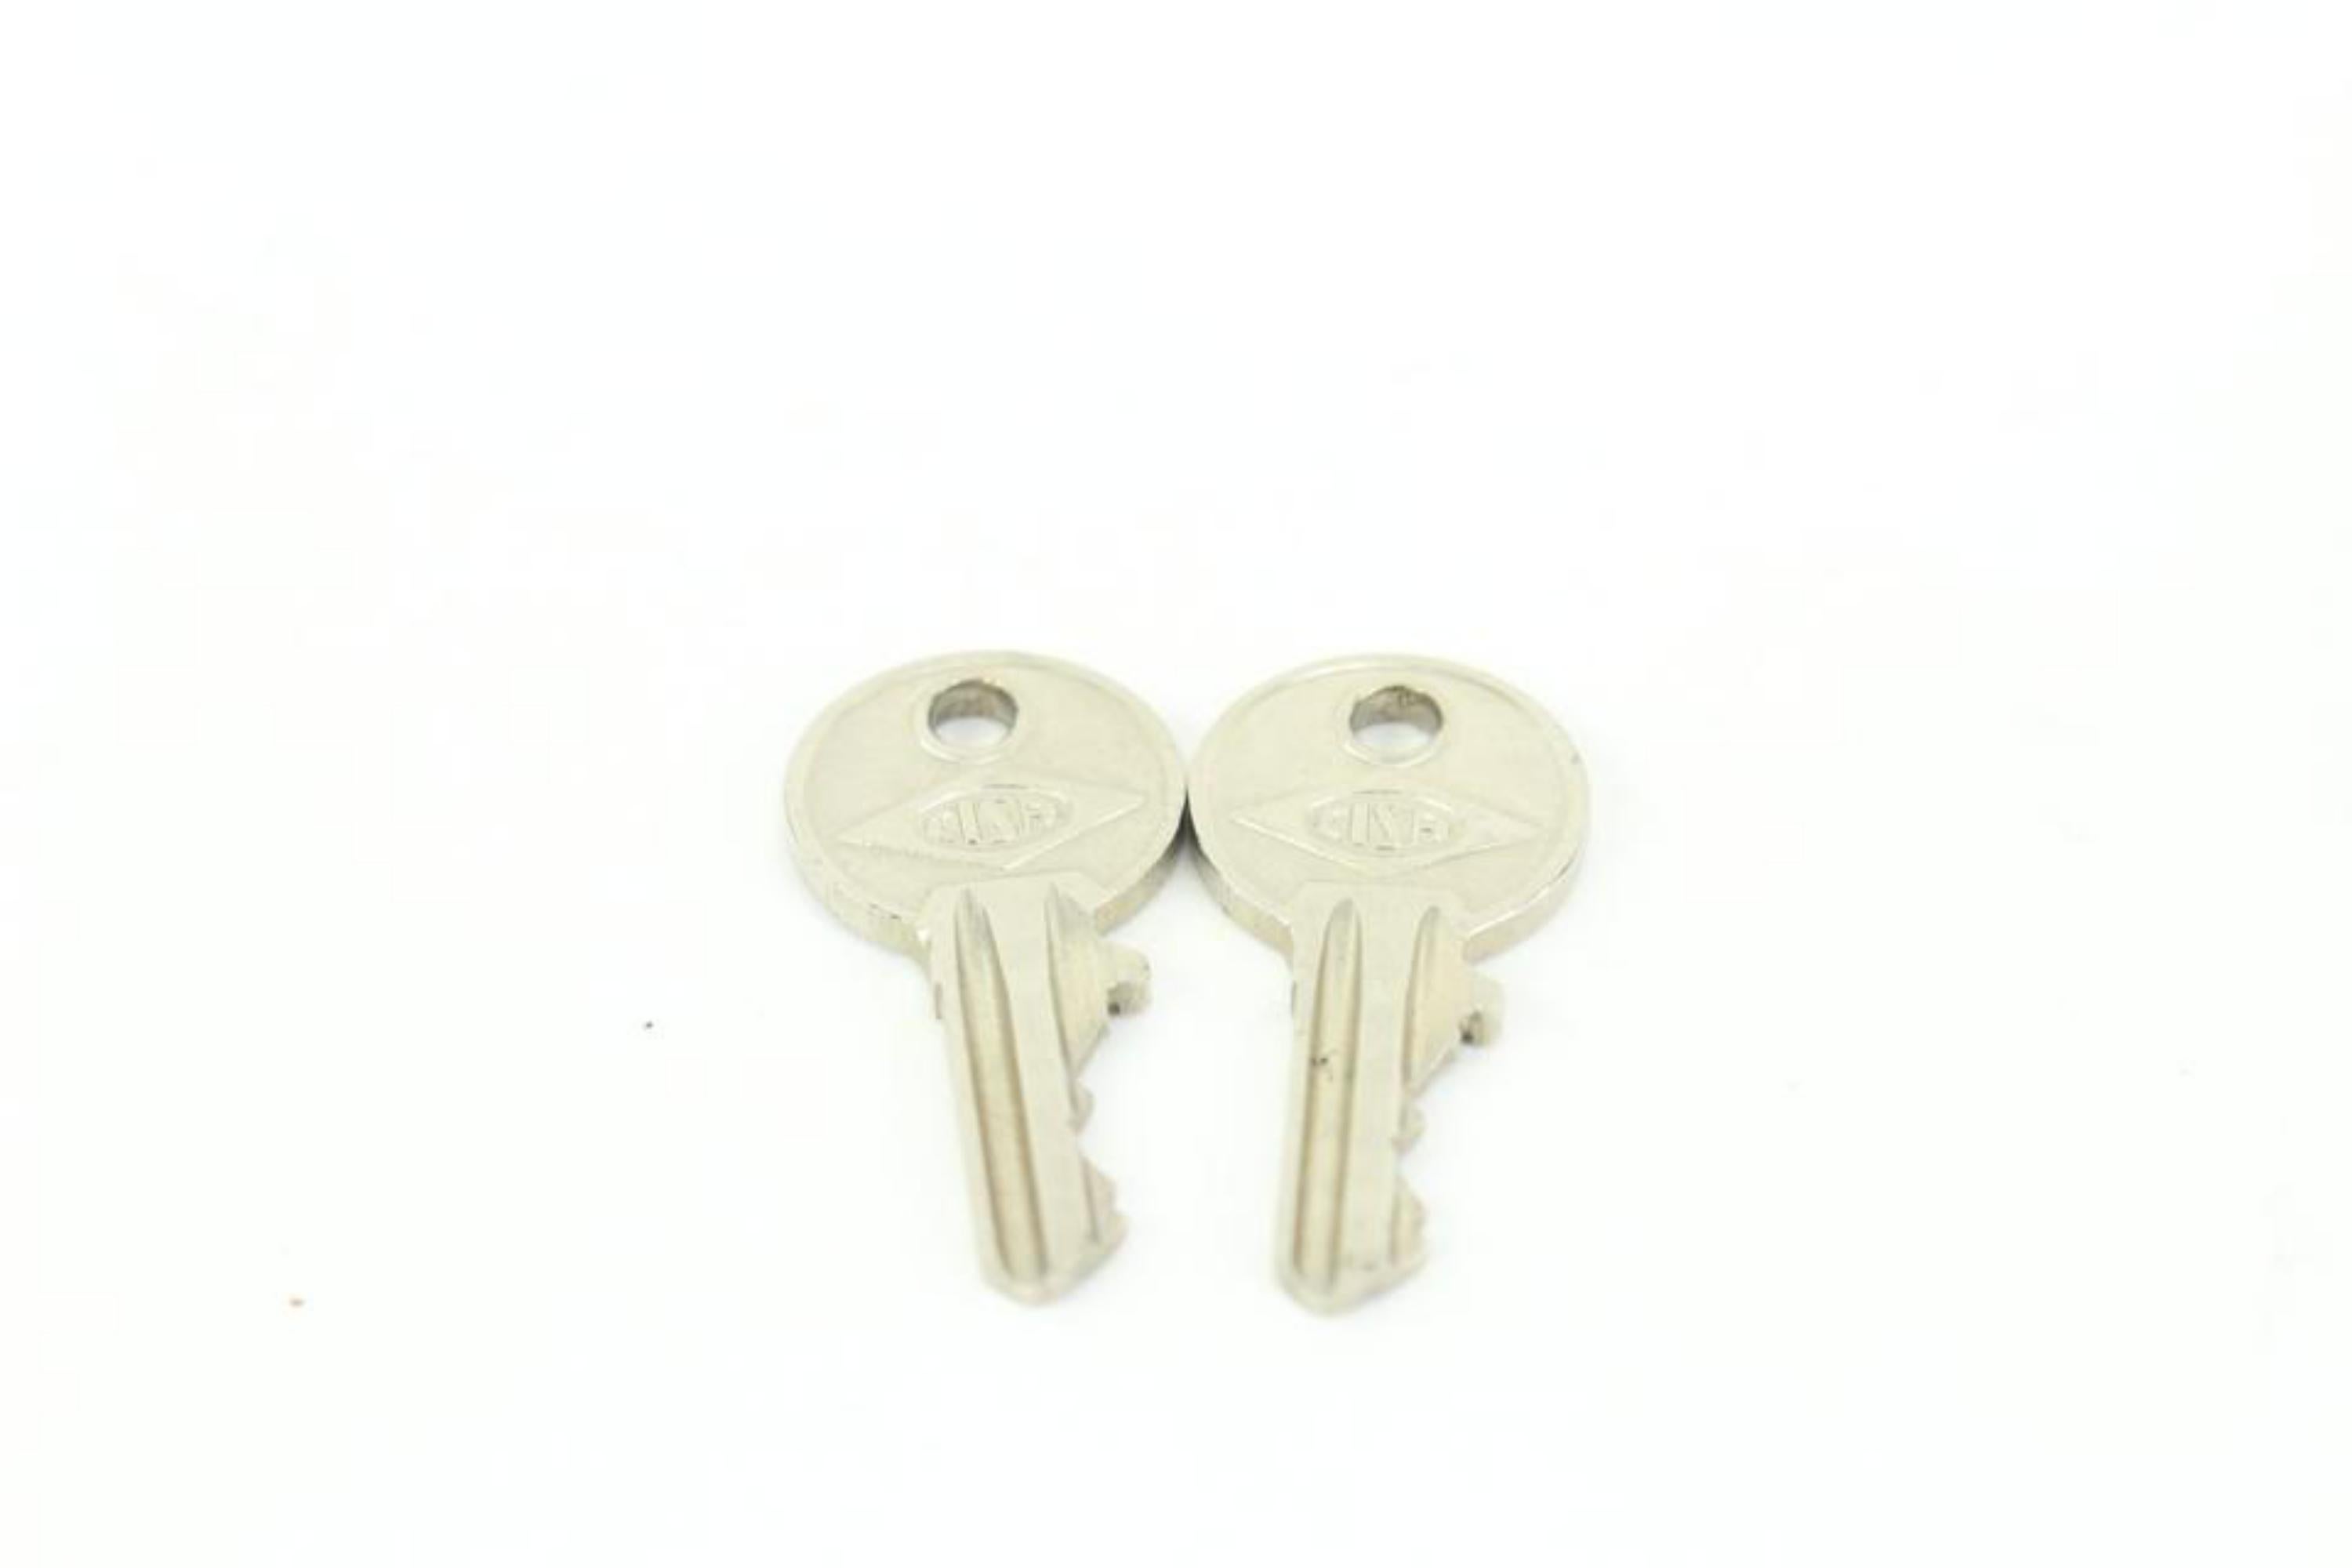 Gucci Brace G Logo Lock and Key Set Cadena Bag Charm Padlock 69g315s 2